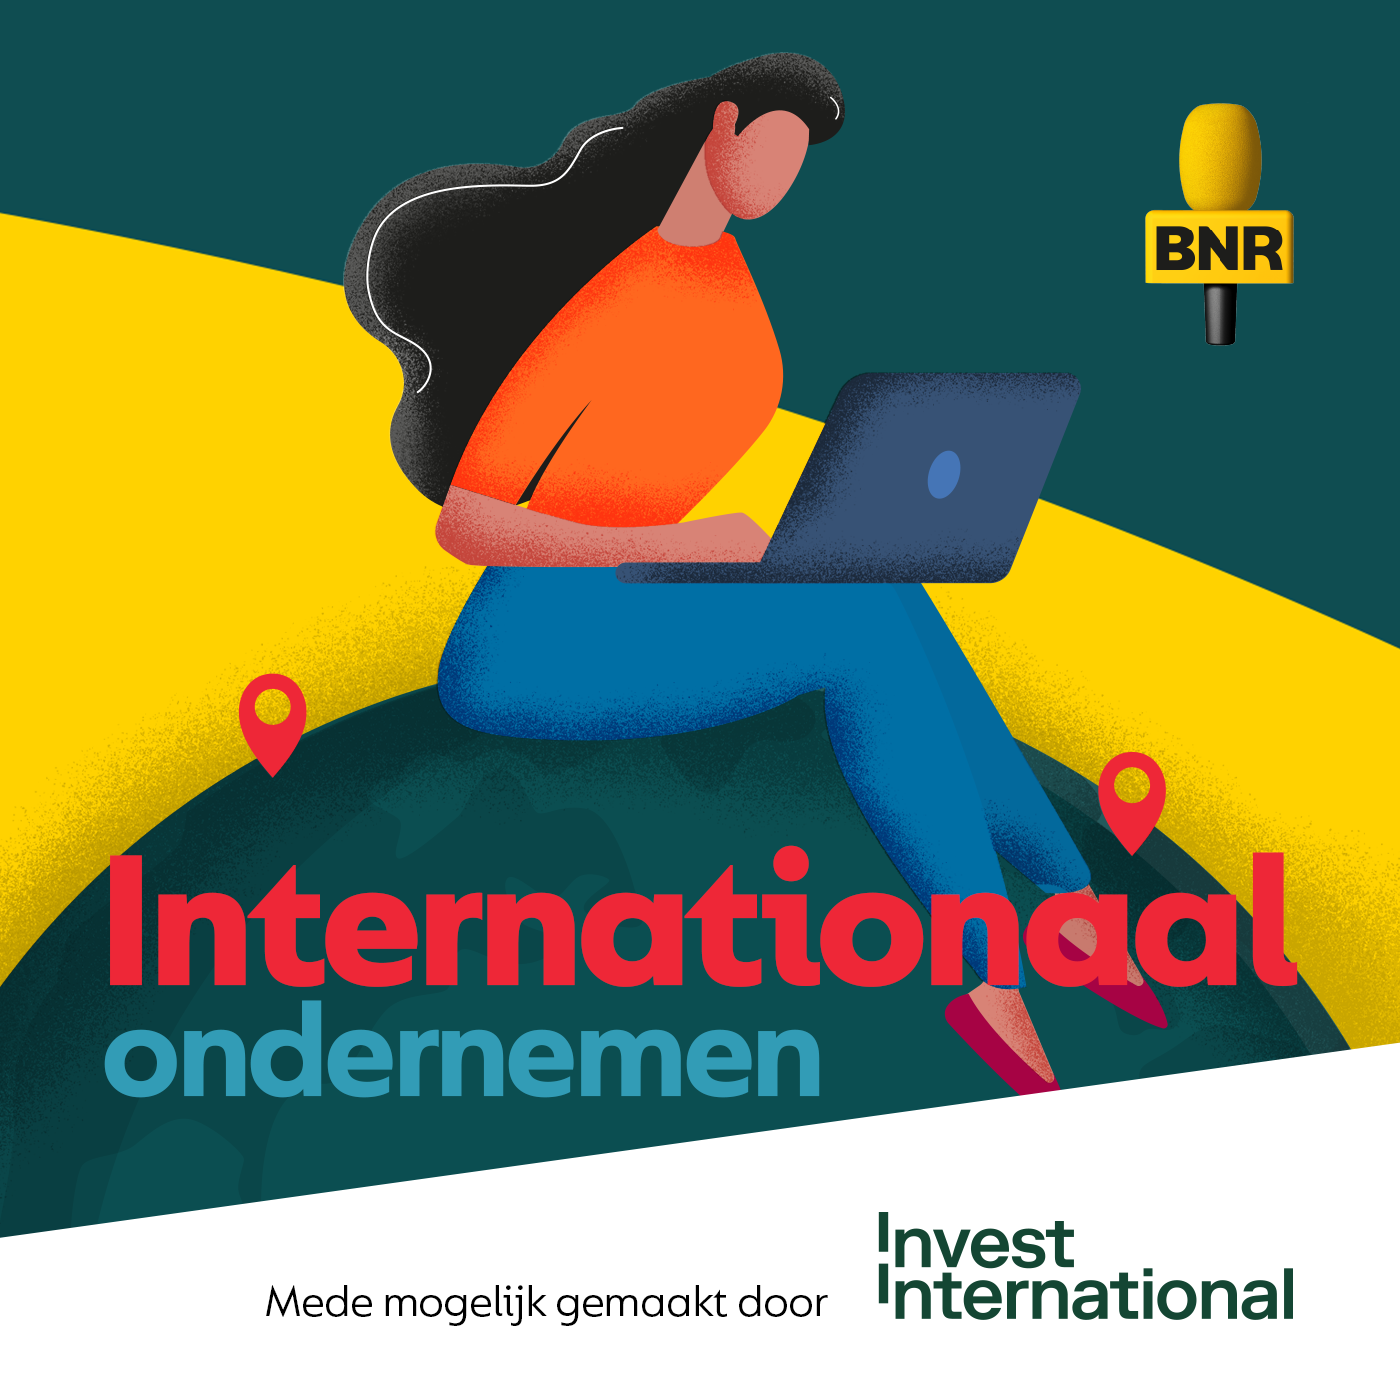 Internationaal ondernemen | BNR